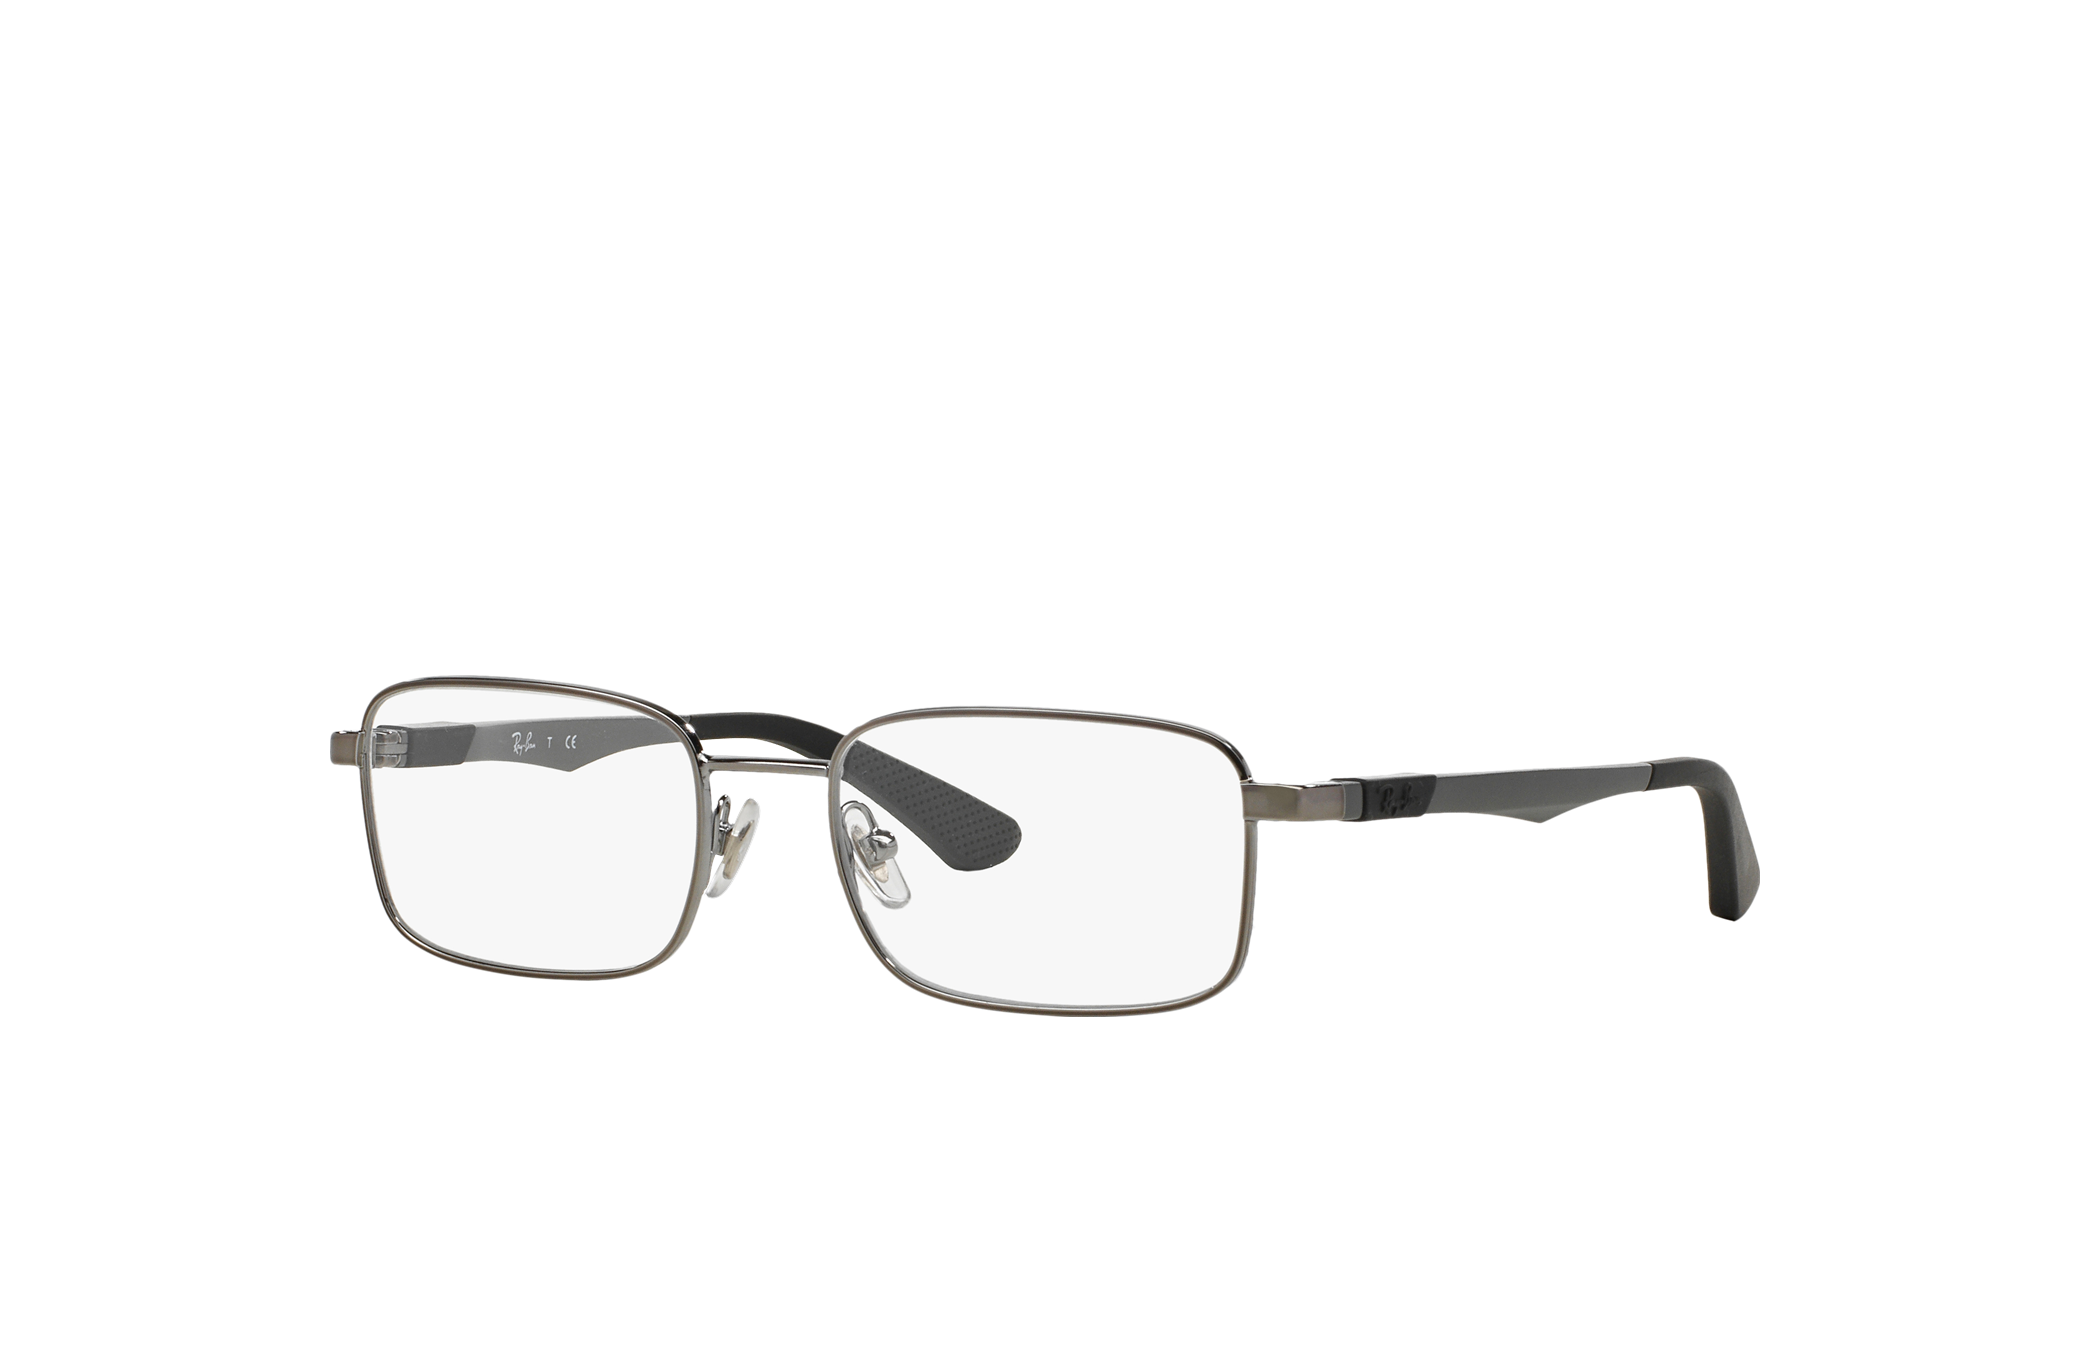 Rb1043 Eyeglasses With Gunmetal Frame Ray Ban®